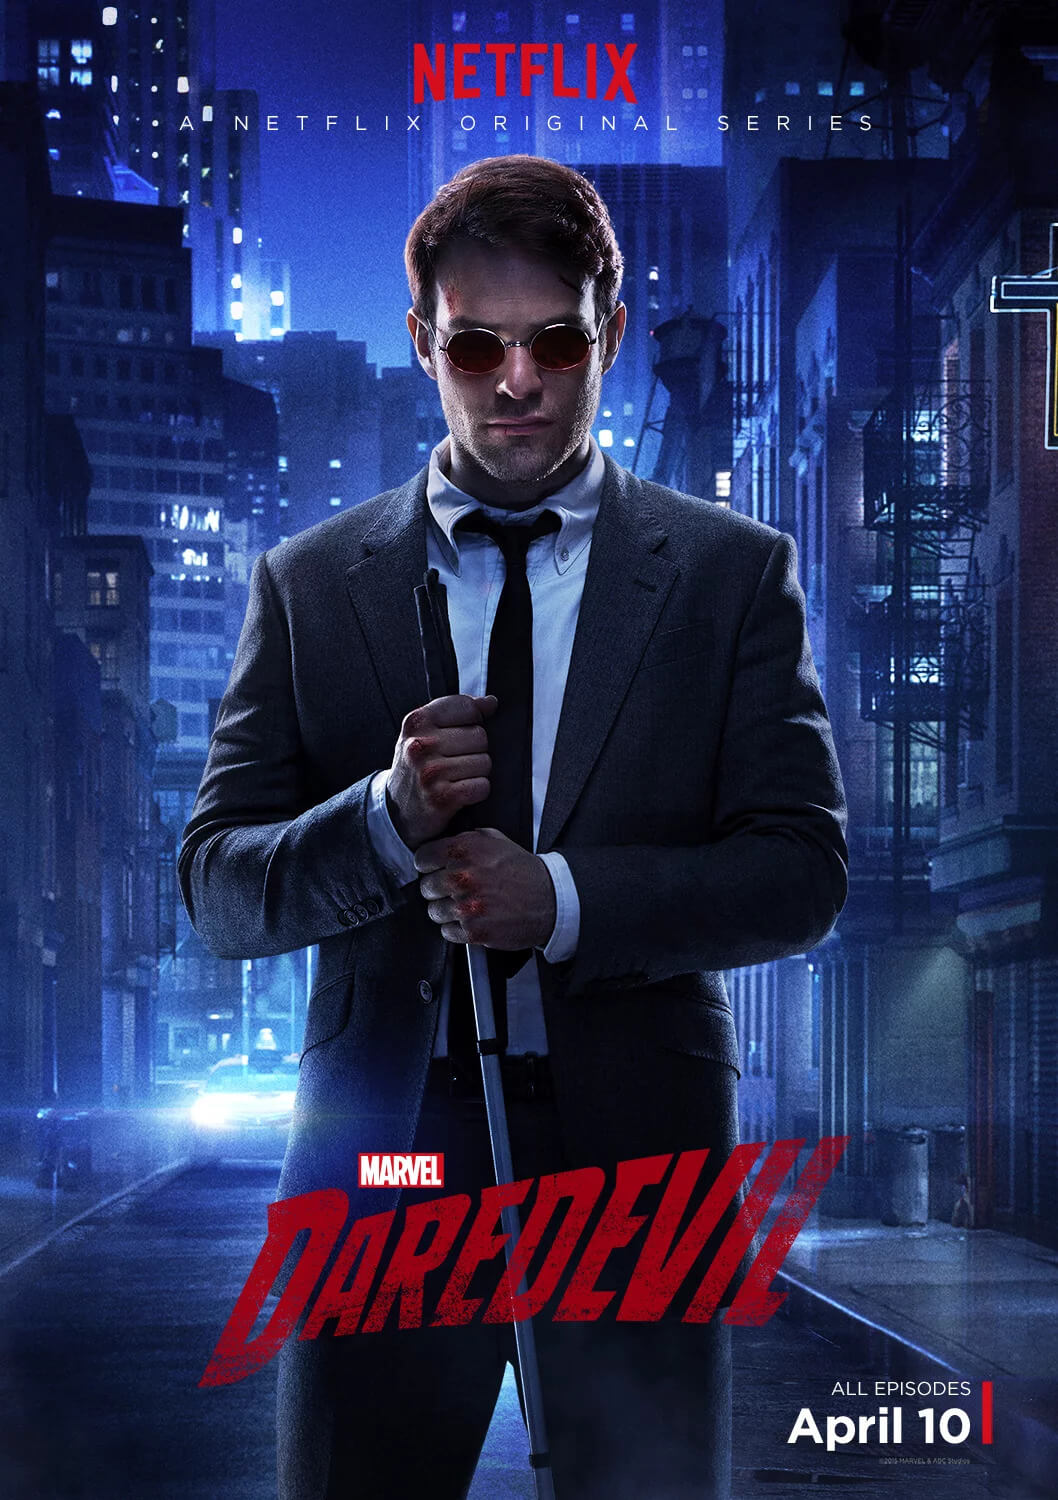 Charlie Cox as Matt Murdock/ Daredevil